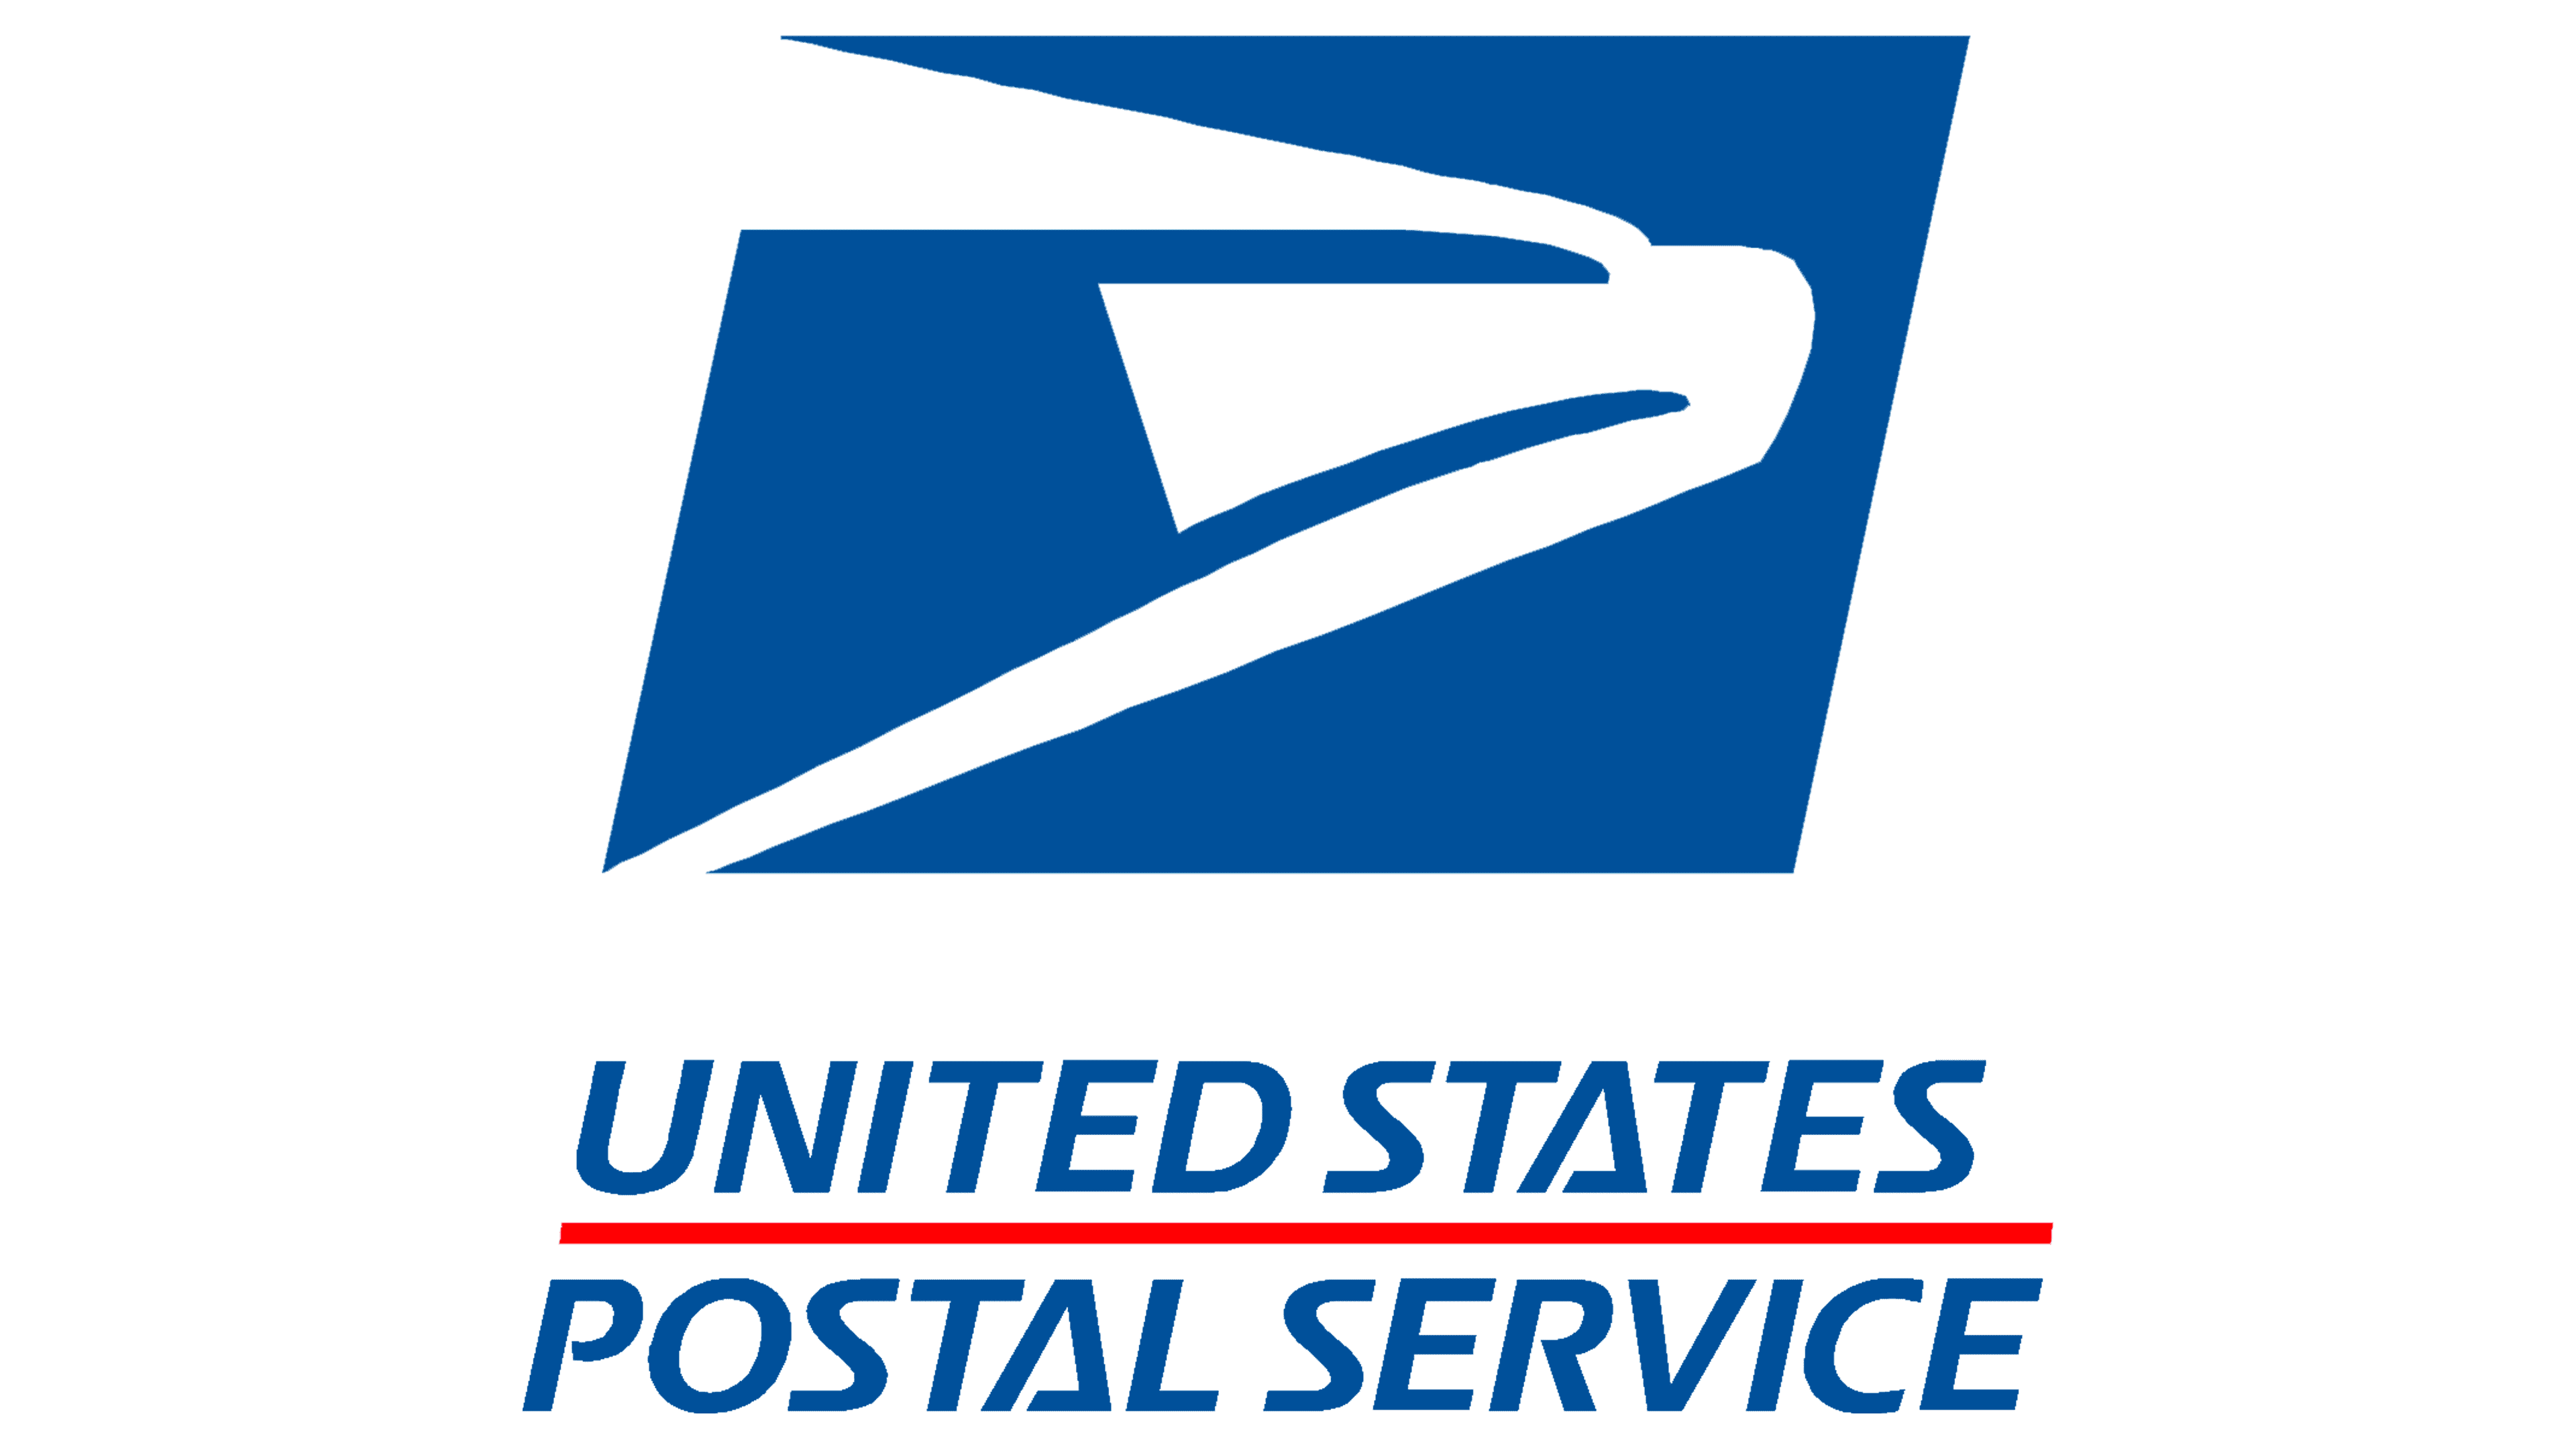 U.S. Postal Service Logo 1970-1993 : r/nostalgia